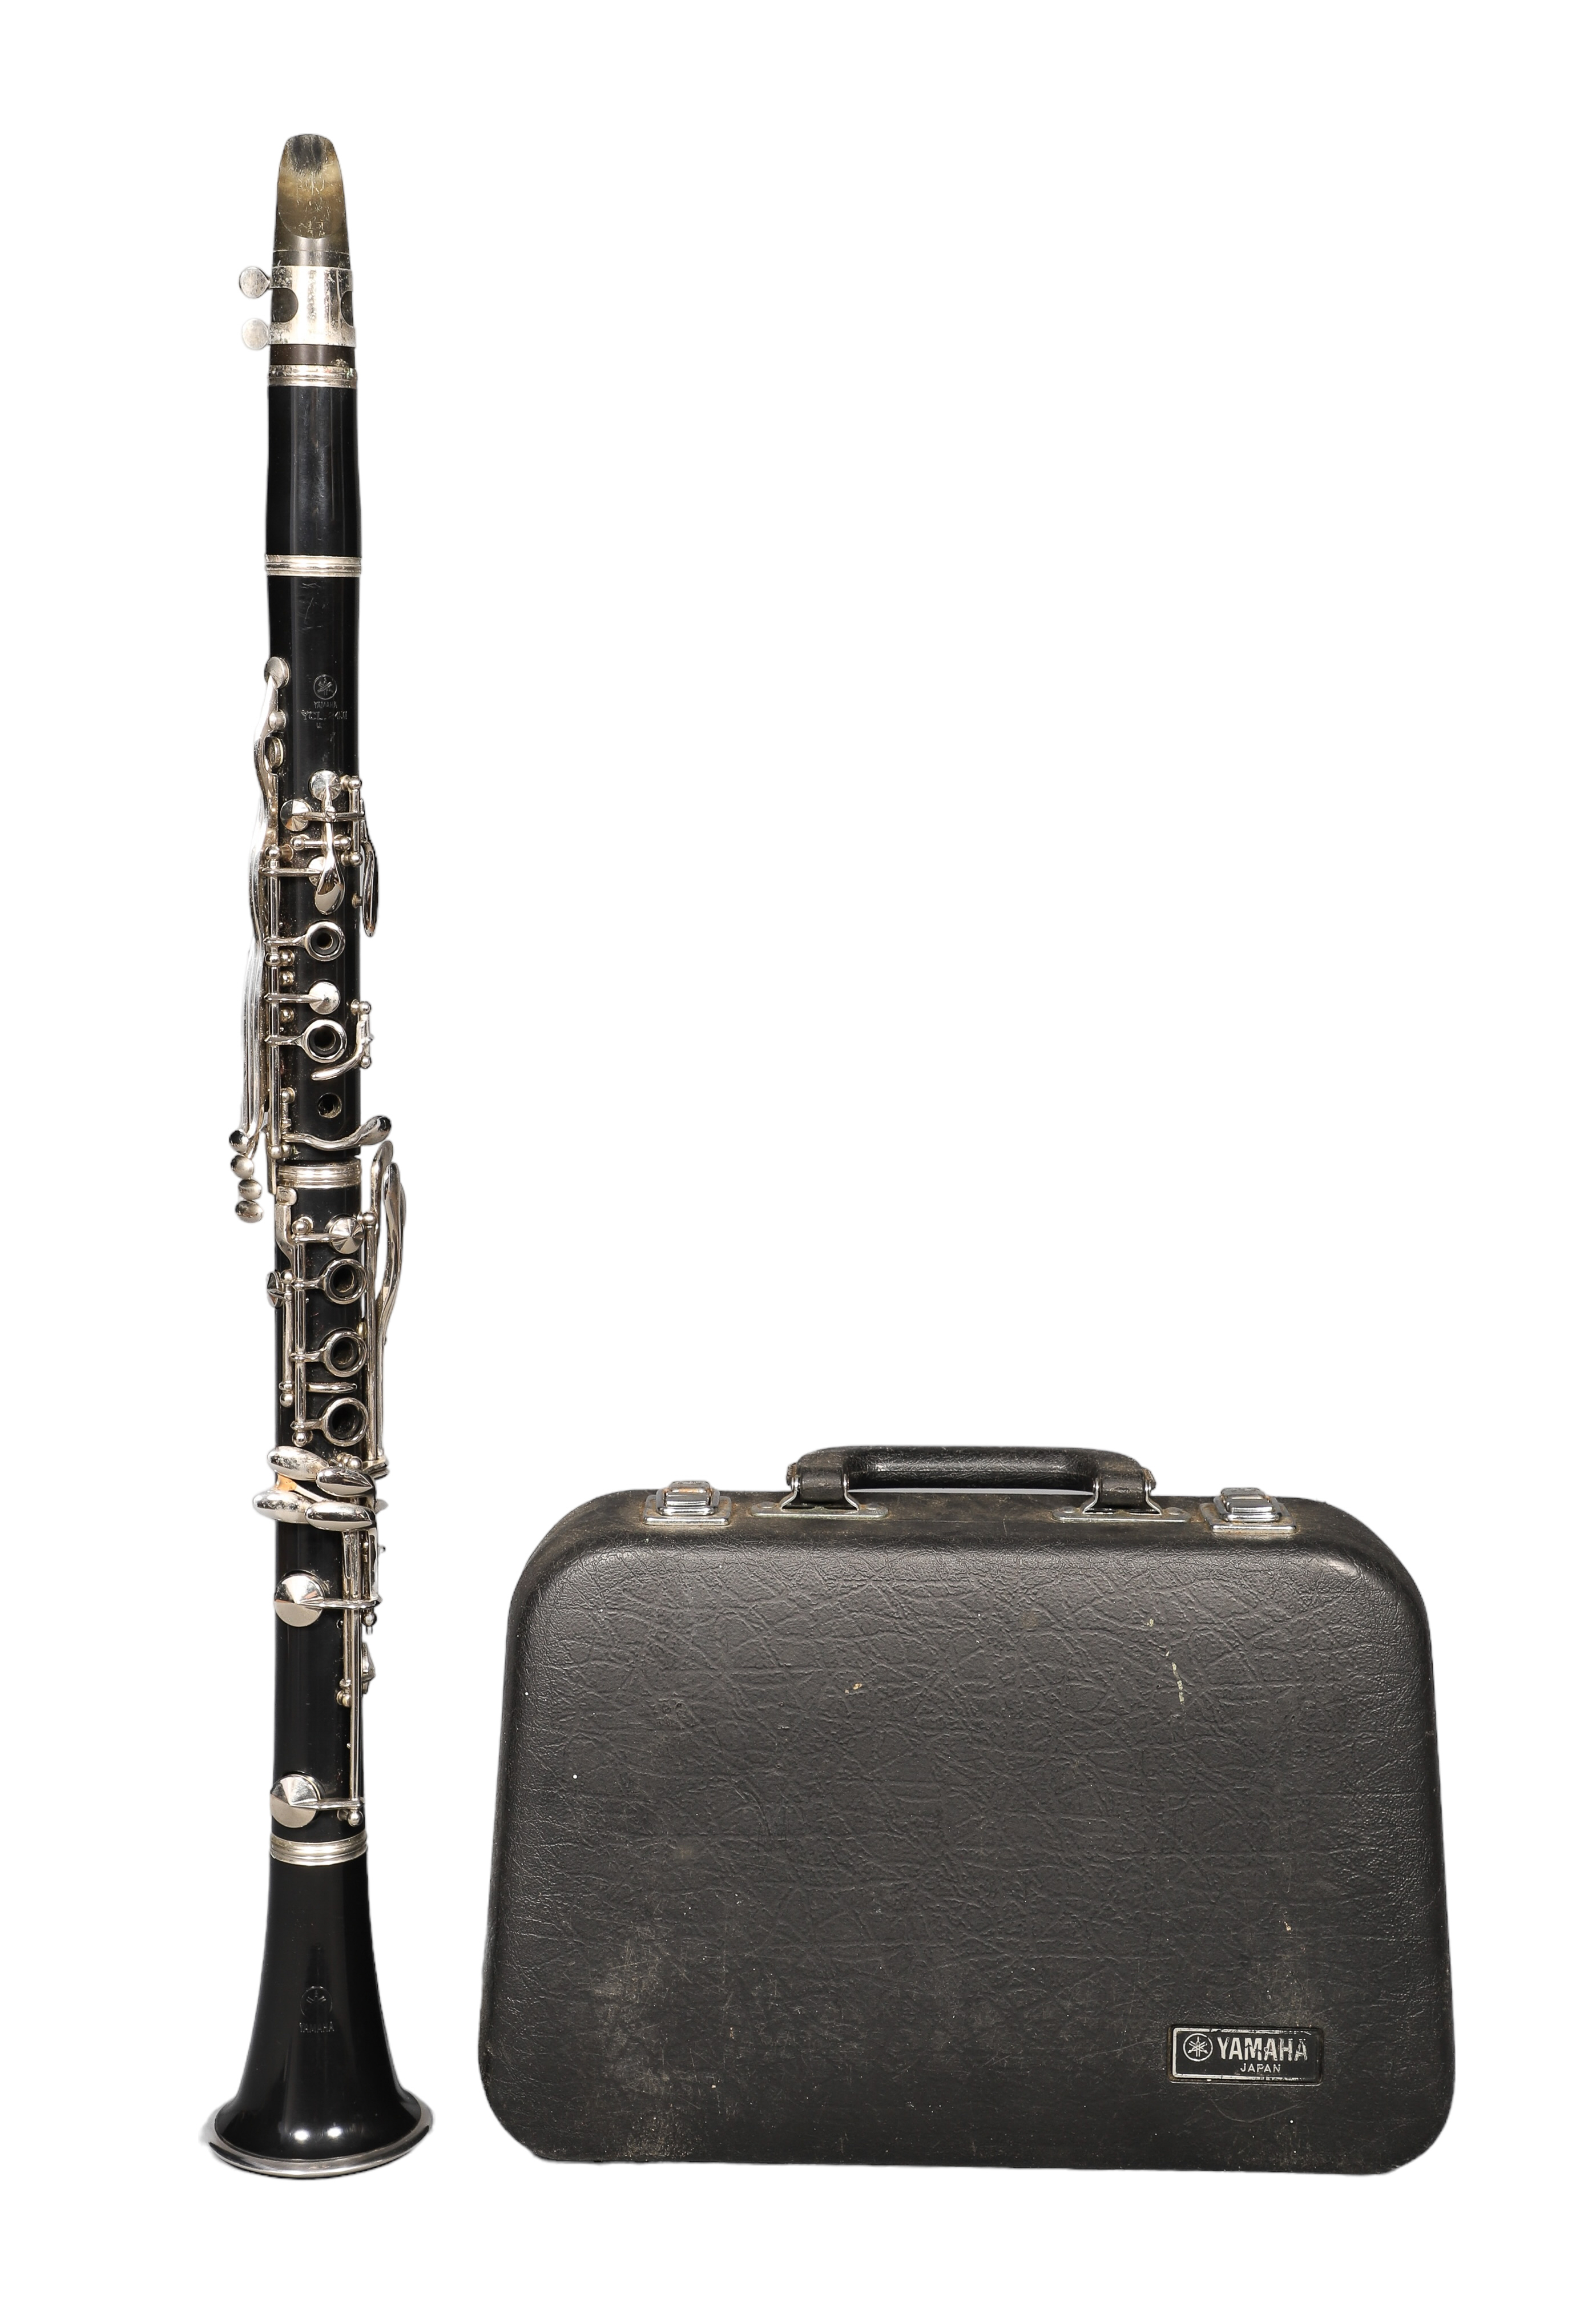 Yamaha YCL 24II clarinet serial 2e1eb1